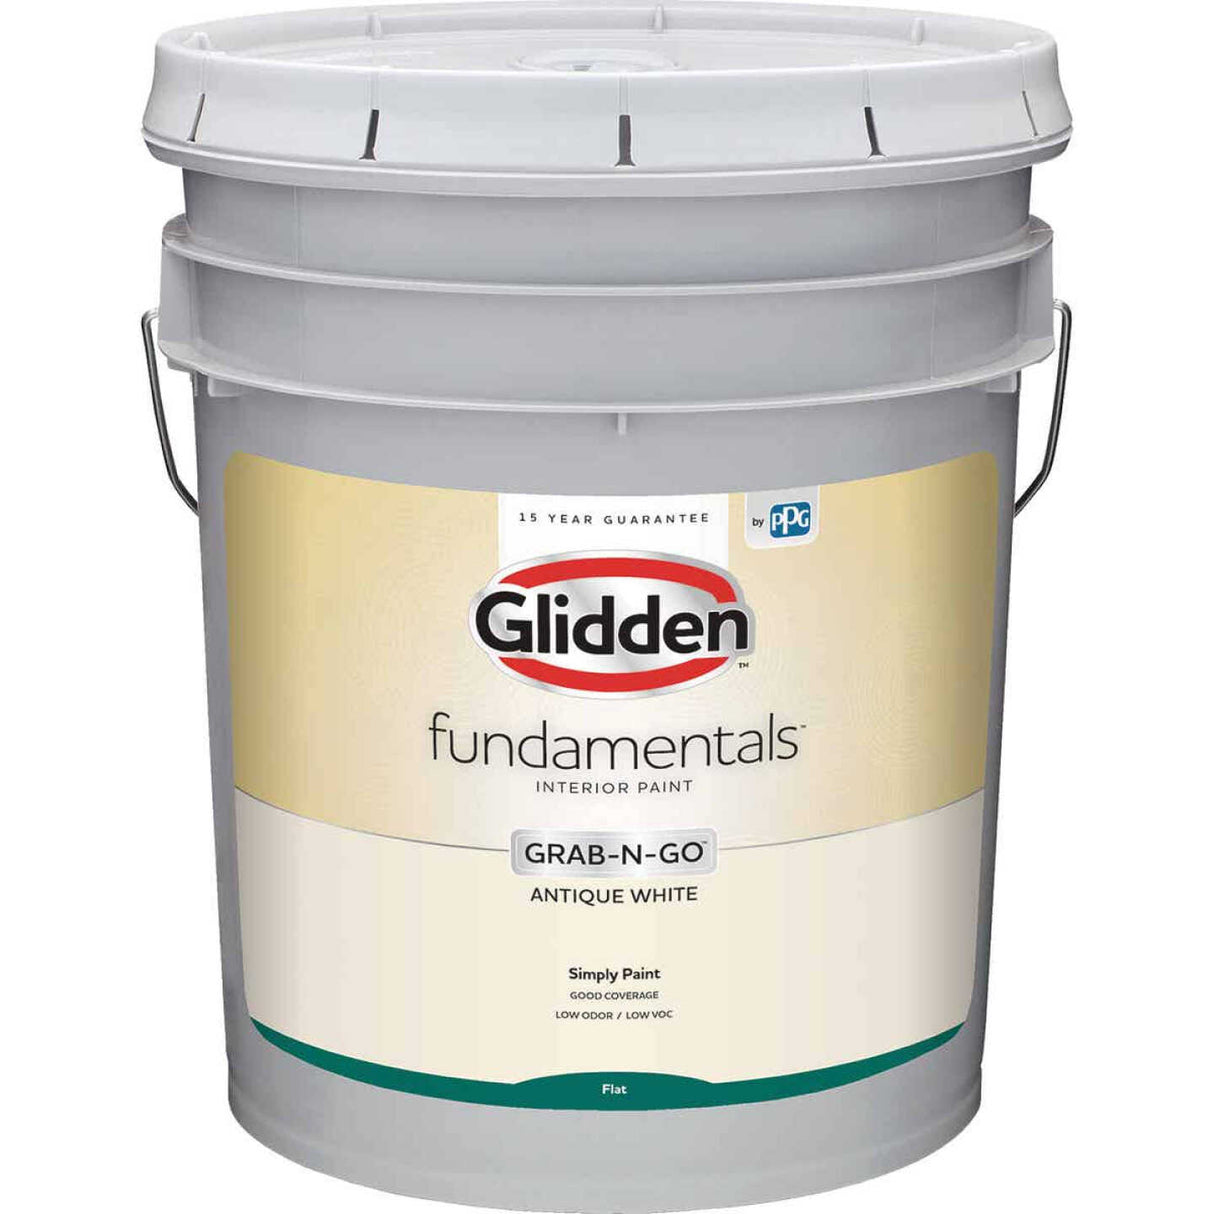 Glidden Fundamentals Grab-N-Go Flat (Antique White, 5-Gallon